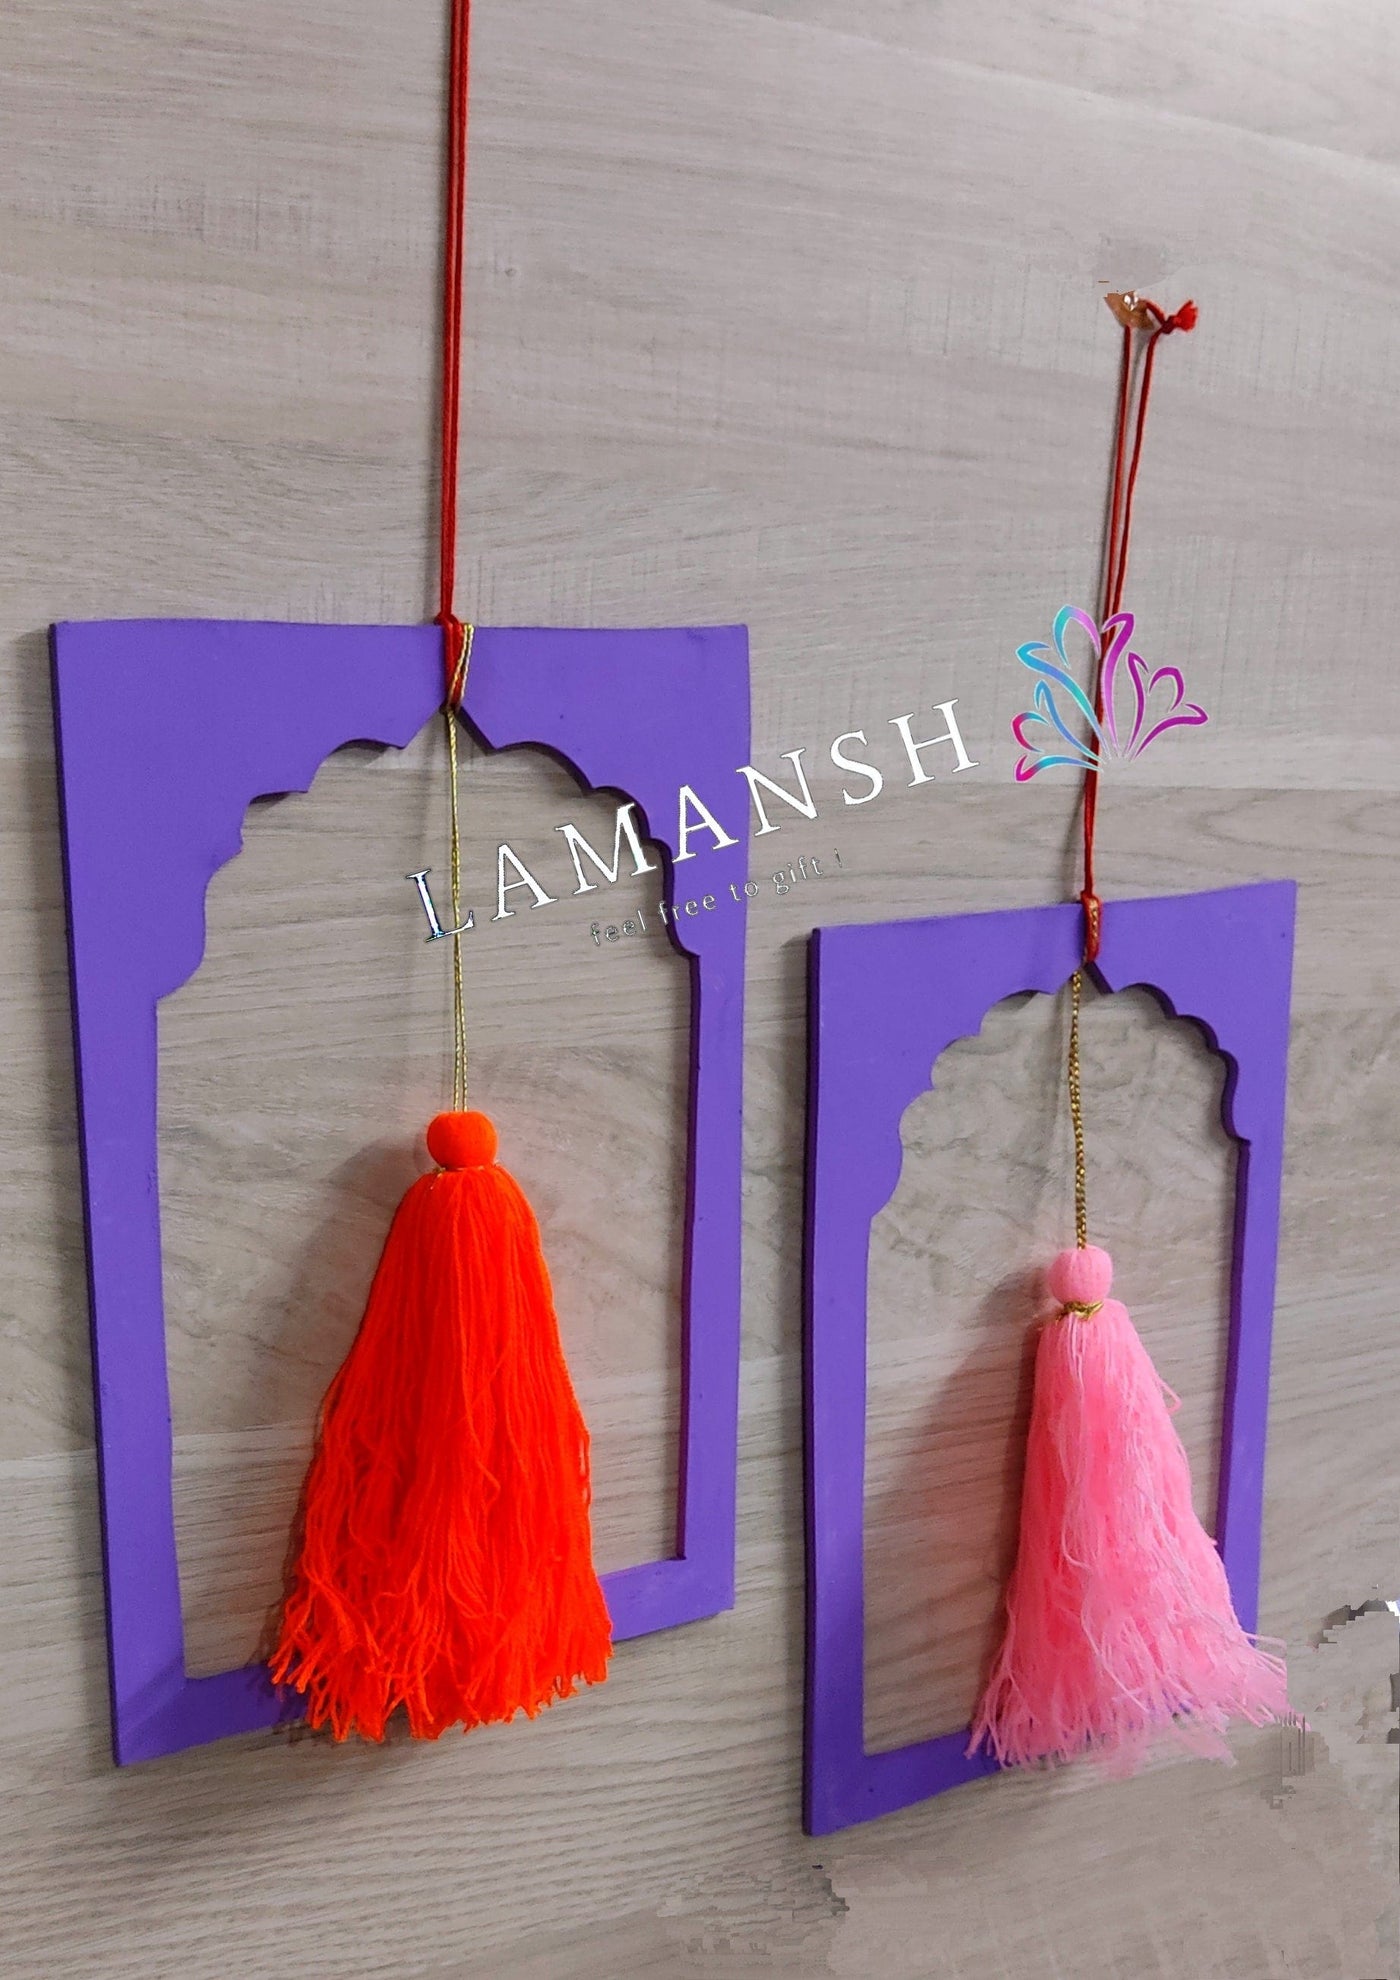 Lamansh event decoration LAMANSH® Decorative Frame Style Tassels (7*11 inch) hangings for indian wedding decoration & backdrops / ethnic event decoration products